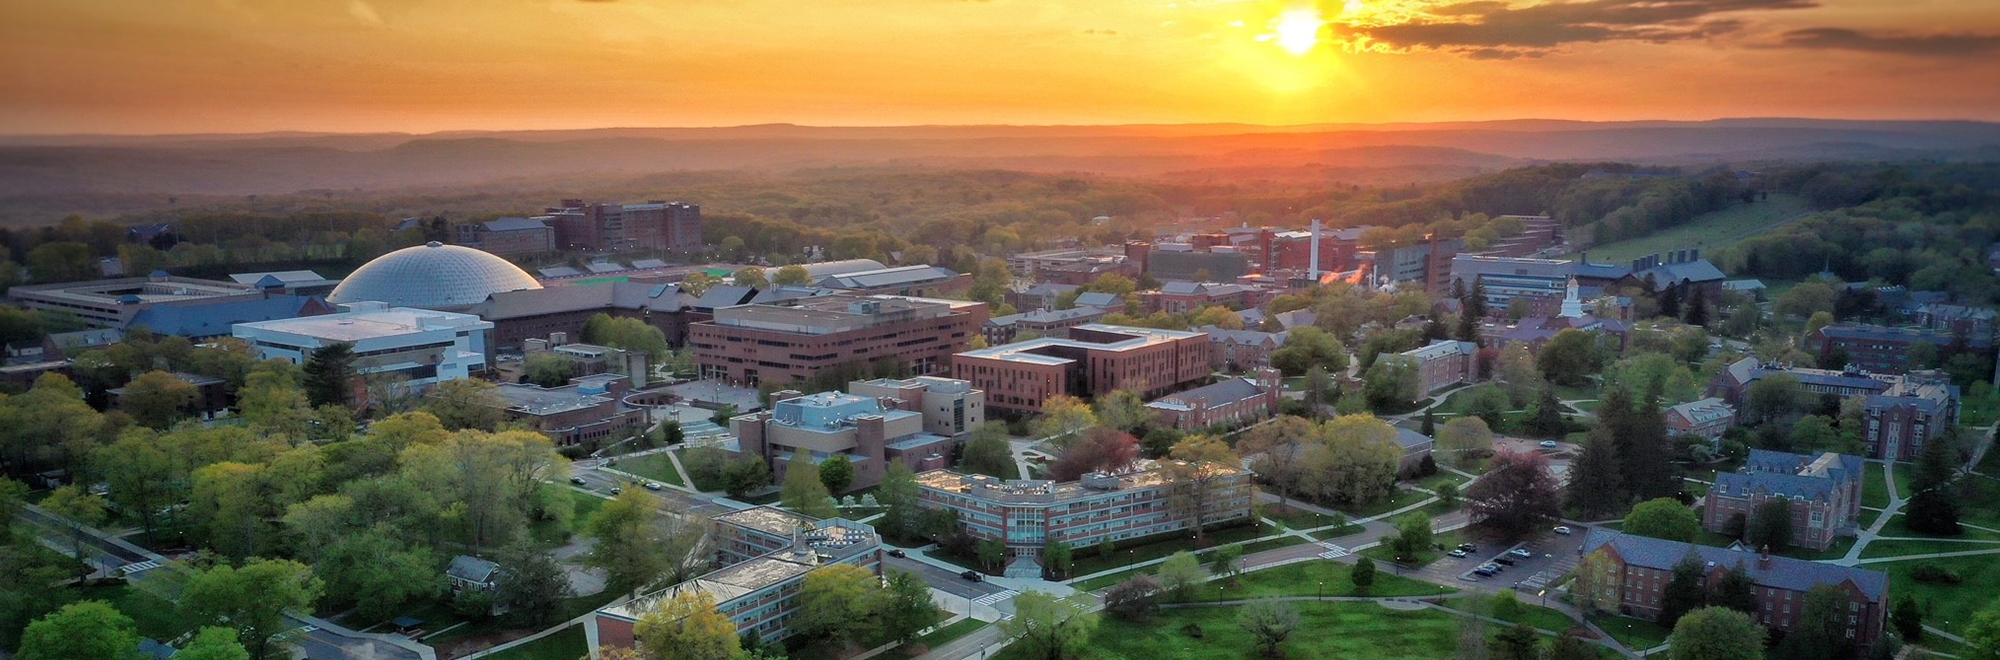 aerial view of storrs campus at sunrise